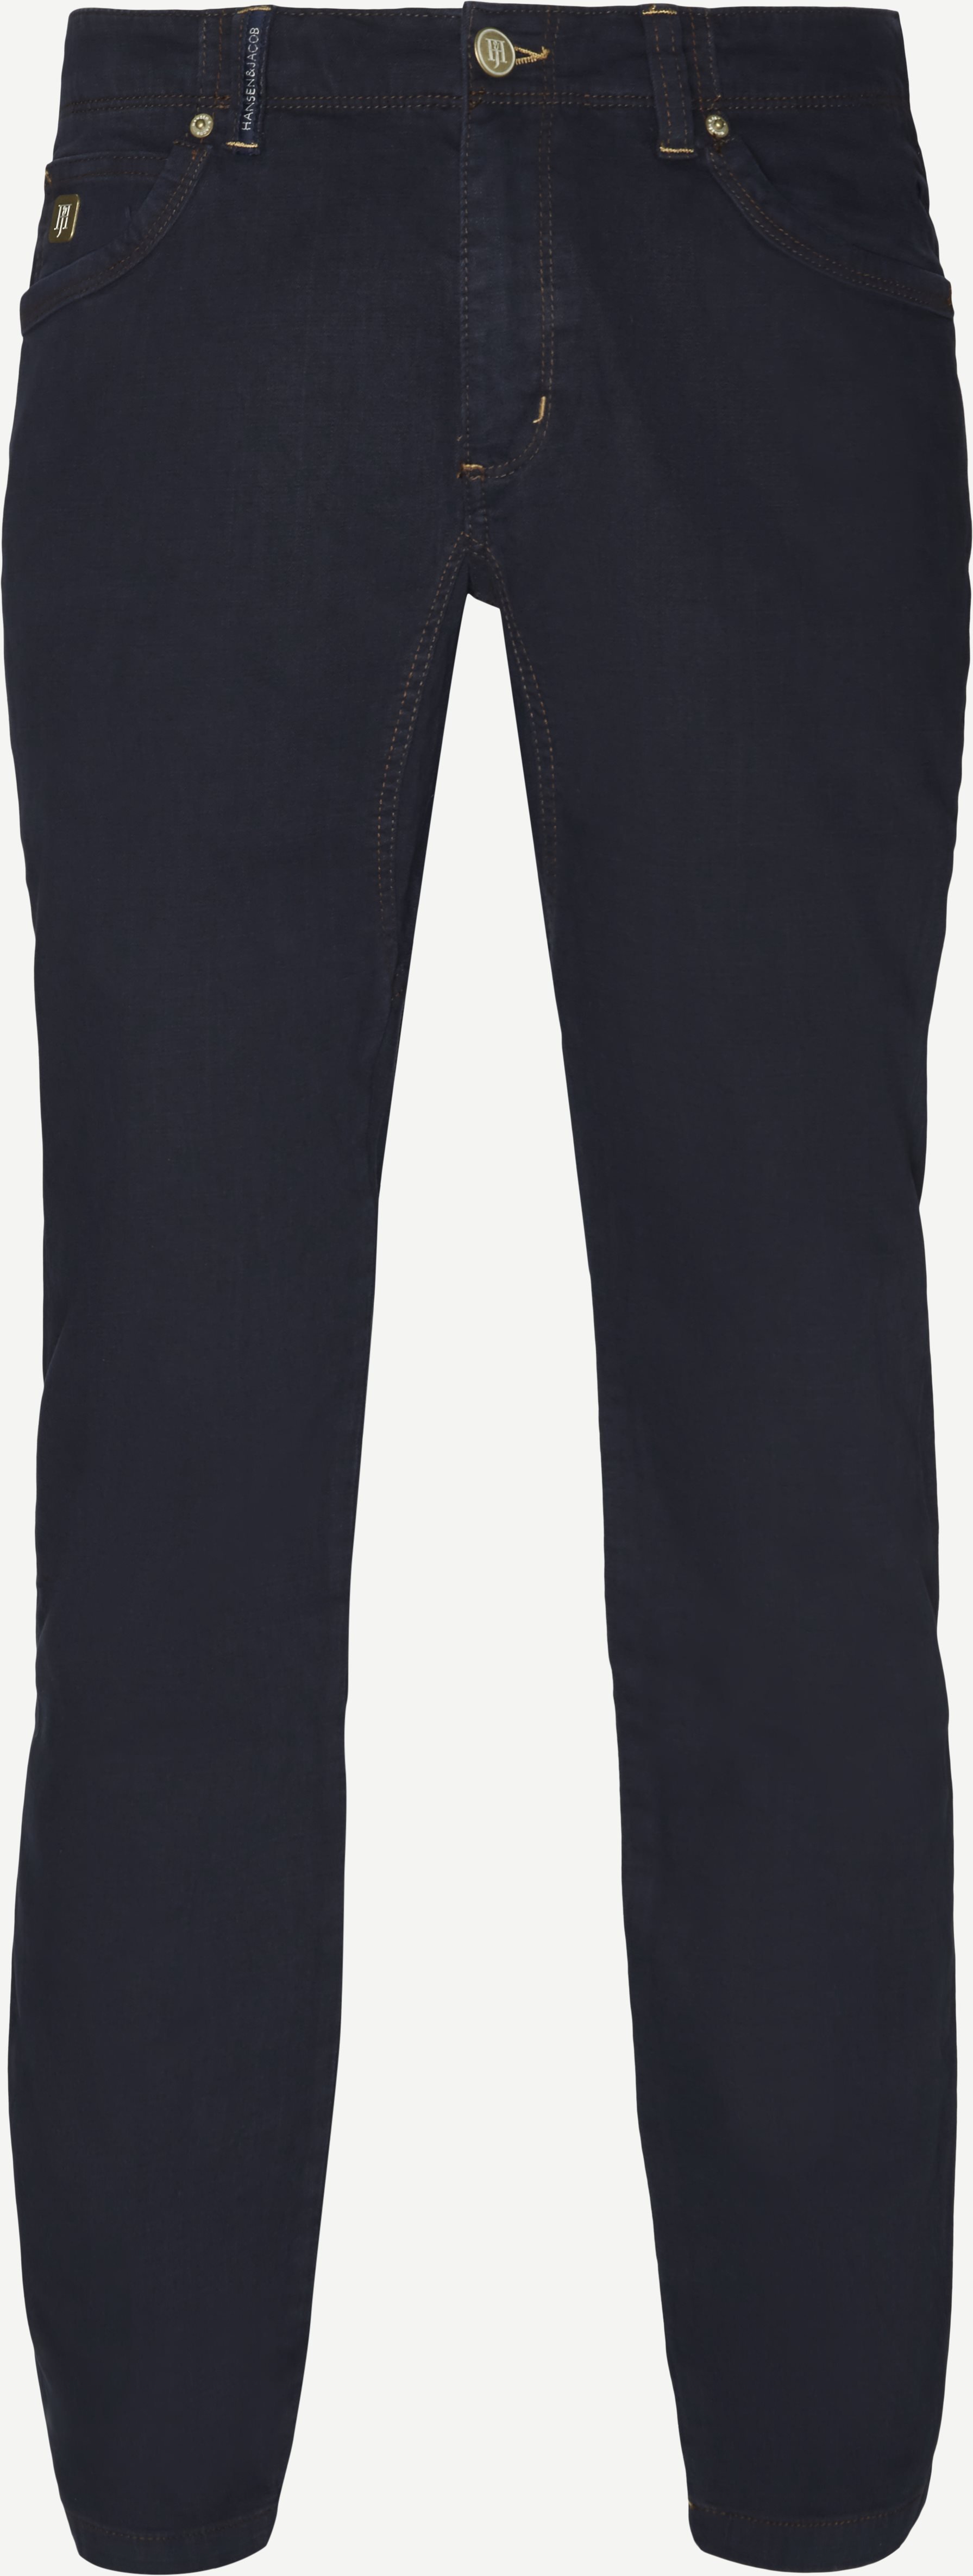 Cut 'N Sew Jeans - Jeans - Modern fit - Blå